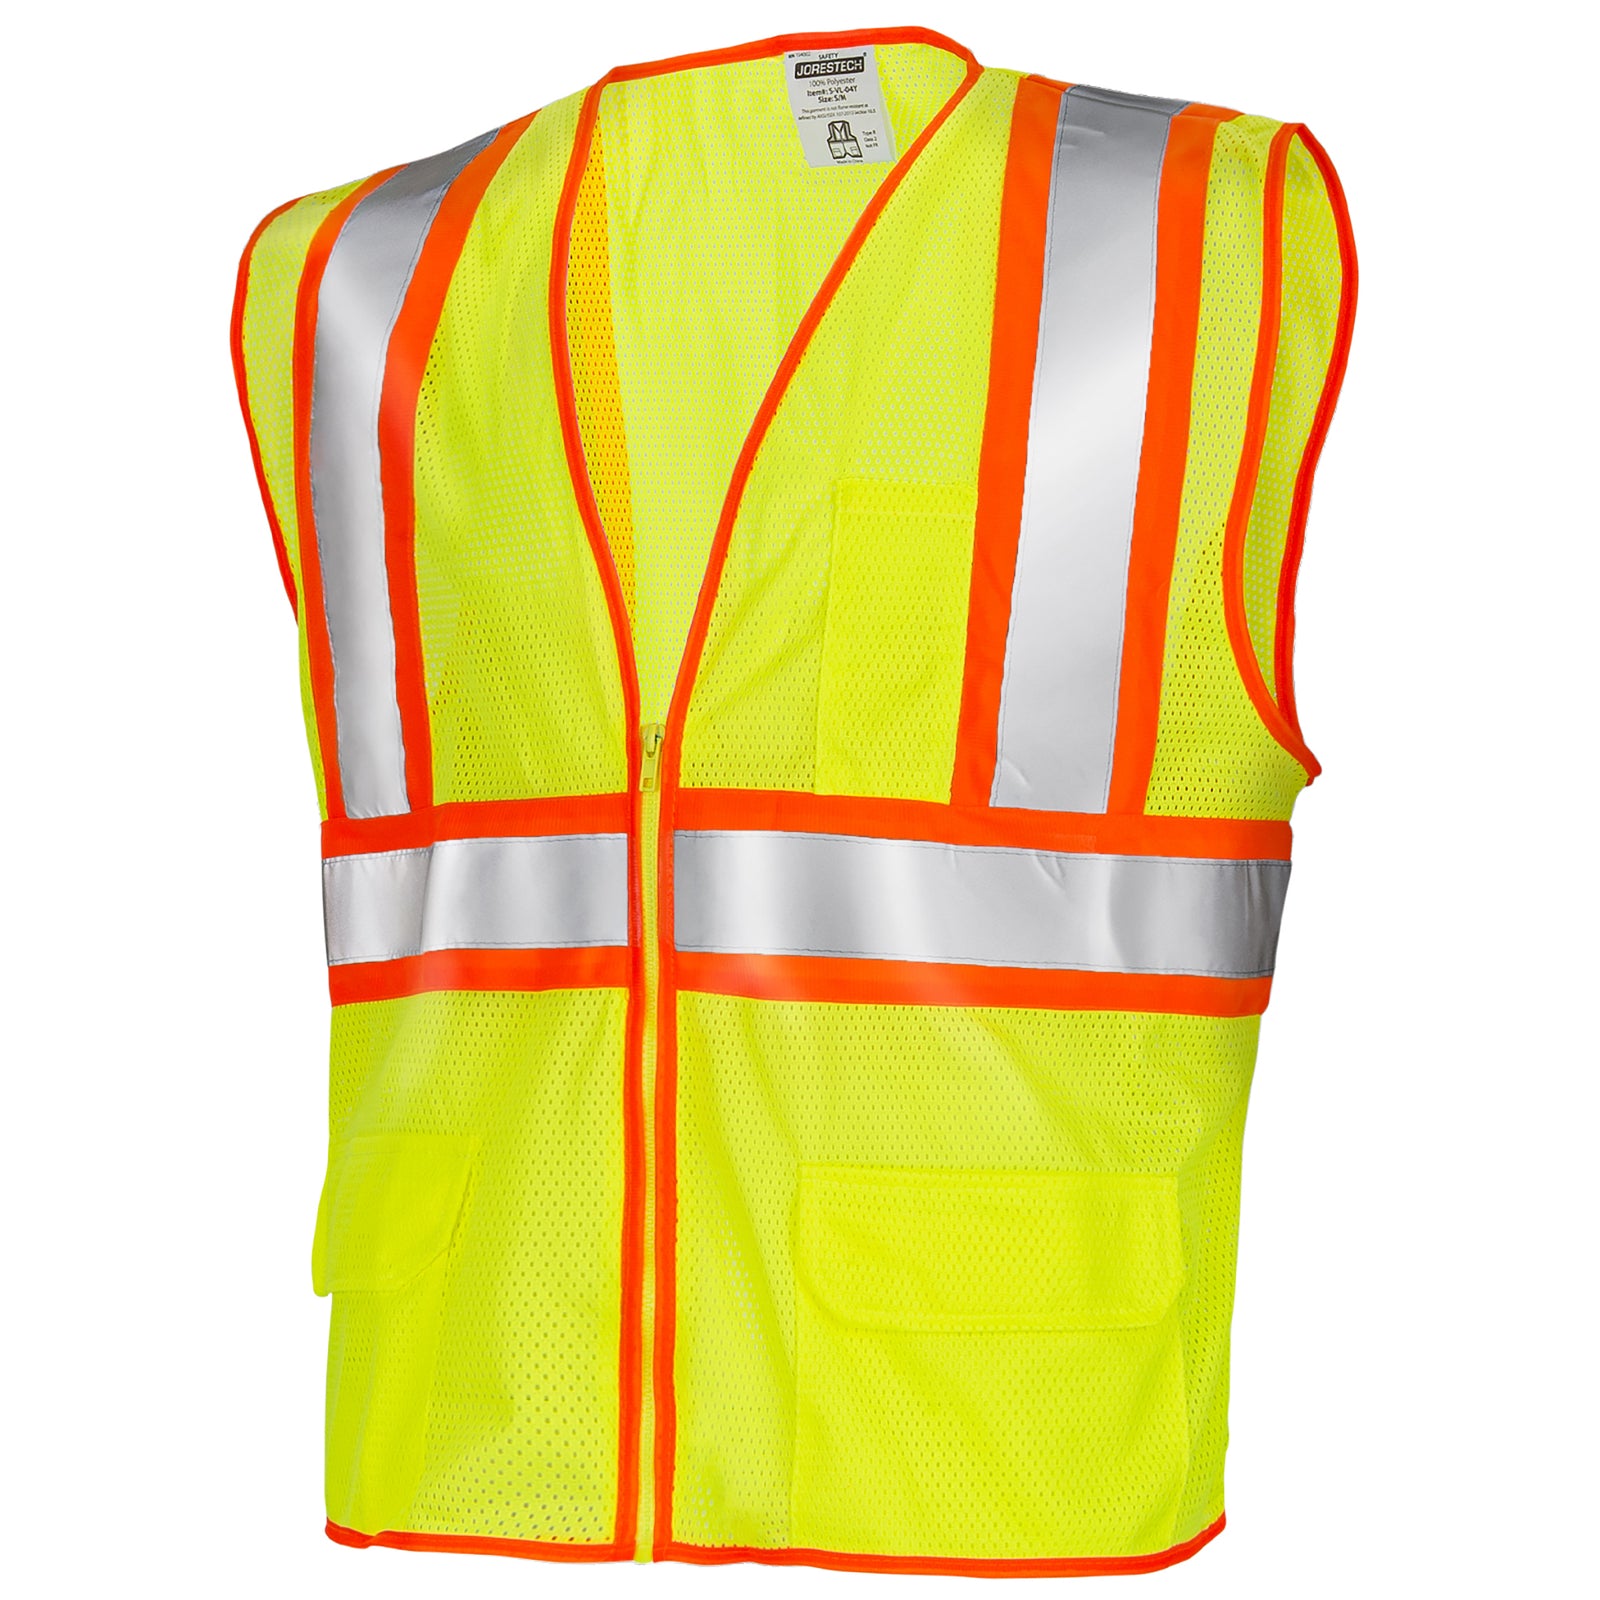 Two-Toned Lime Hi-Vis Safety Vest | Reflective Strips - JORESTECH 2XL/3XL / Parking